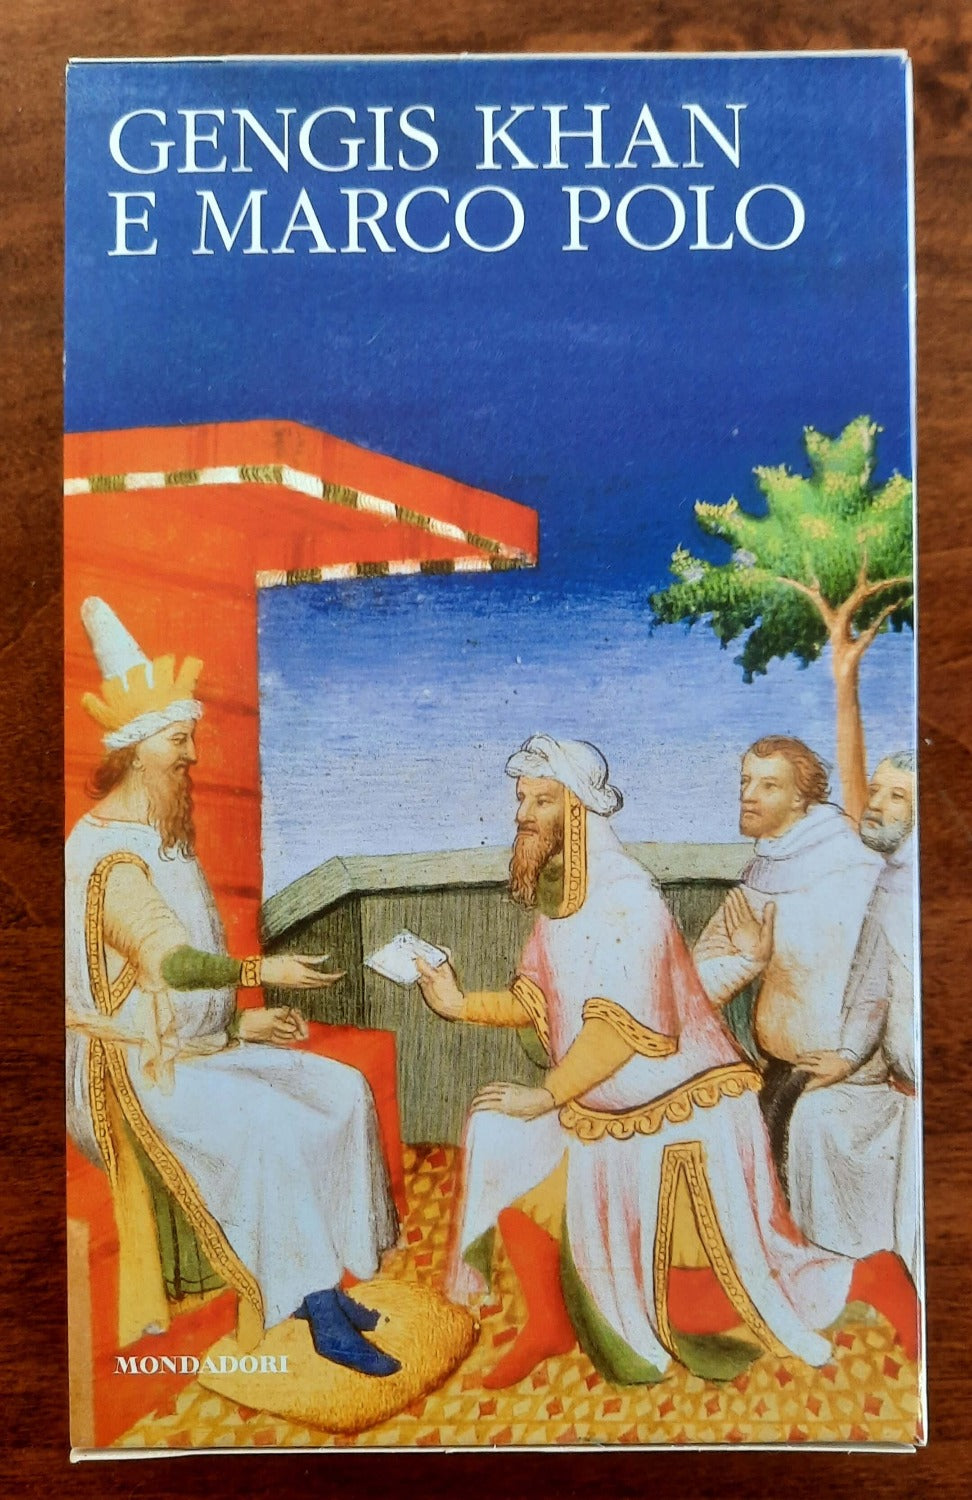 Gengis Khan e Marco Polo - Mondadori